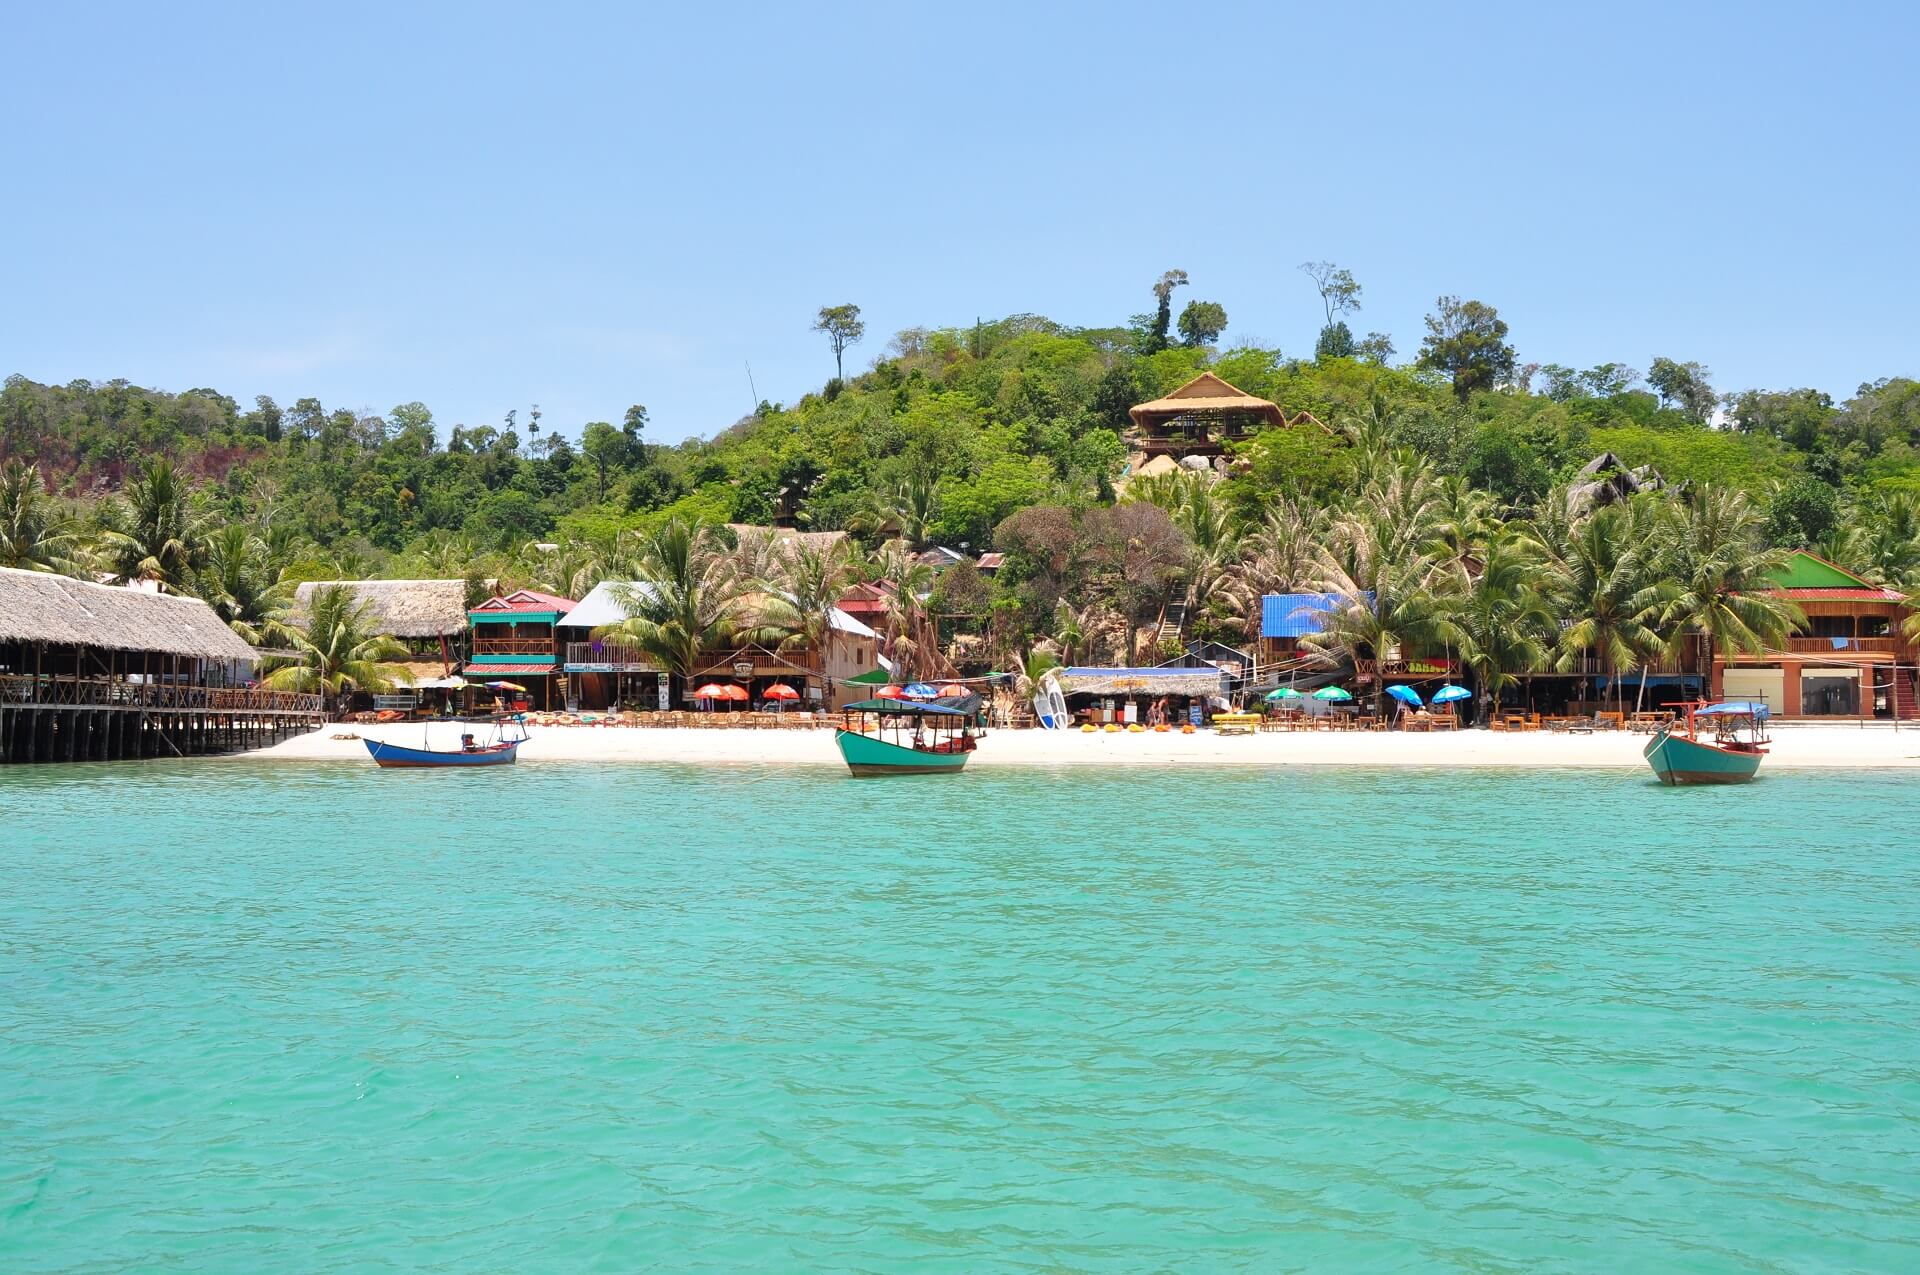 Der kleine Anlegesteg der Insel Koh Rong